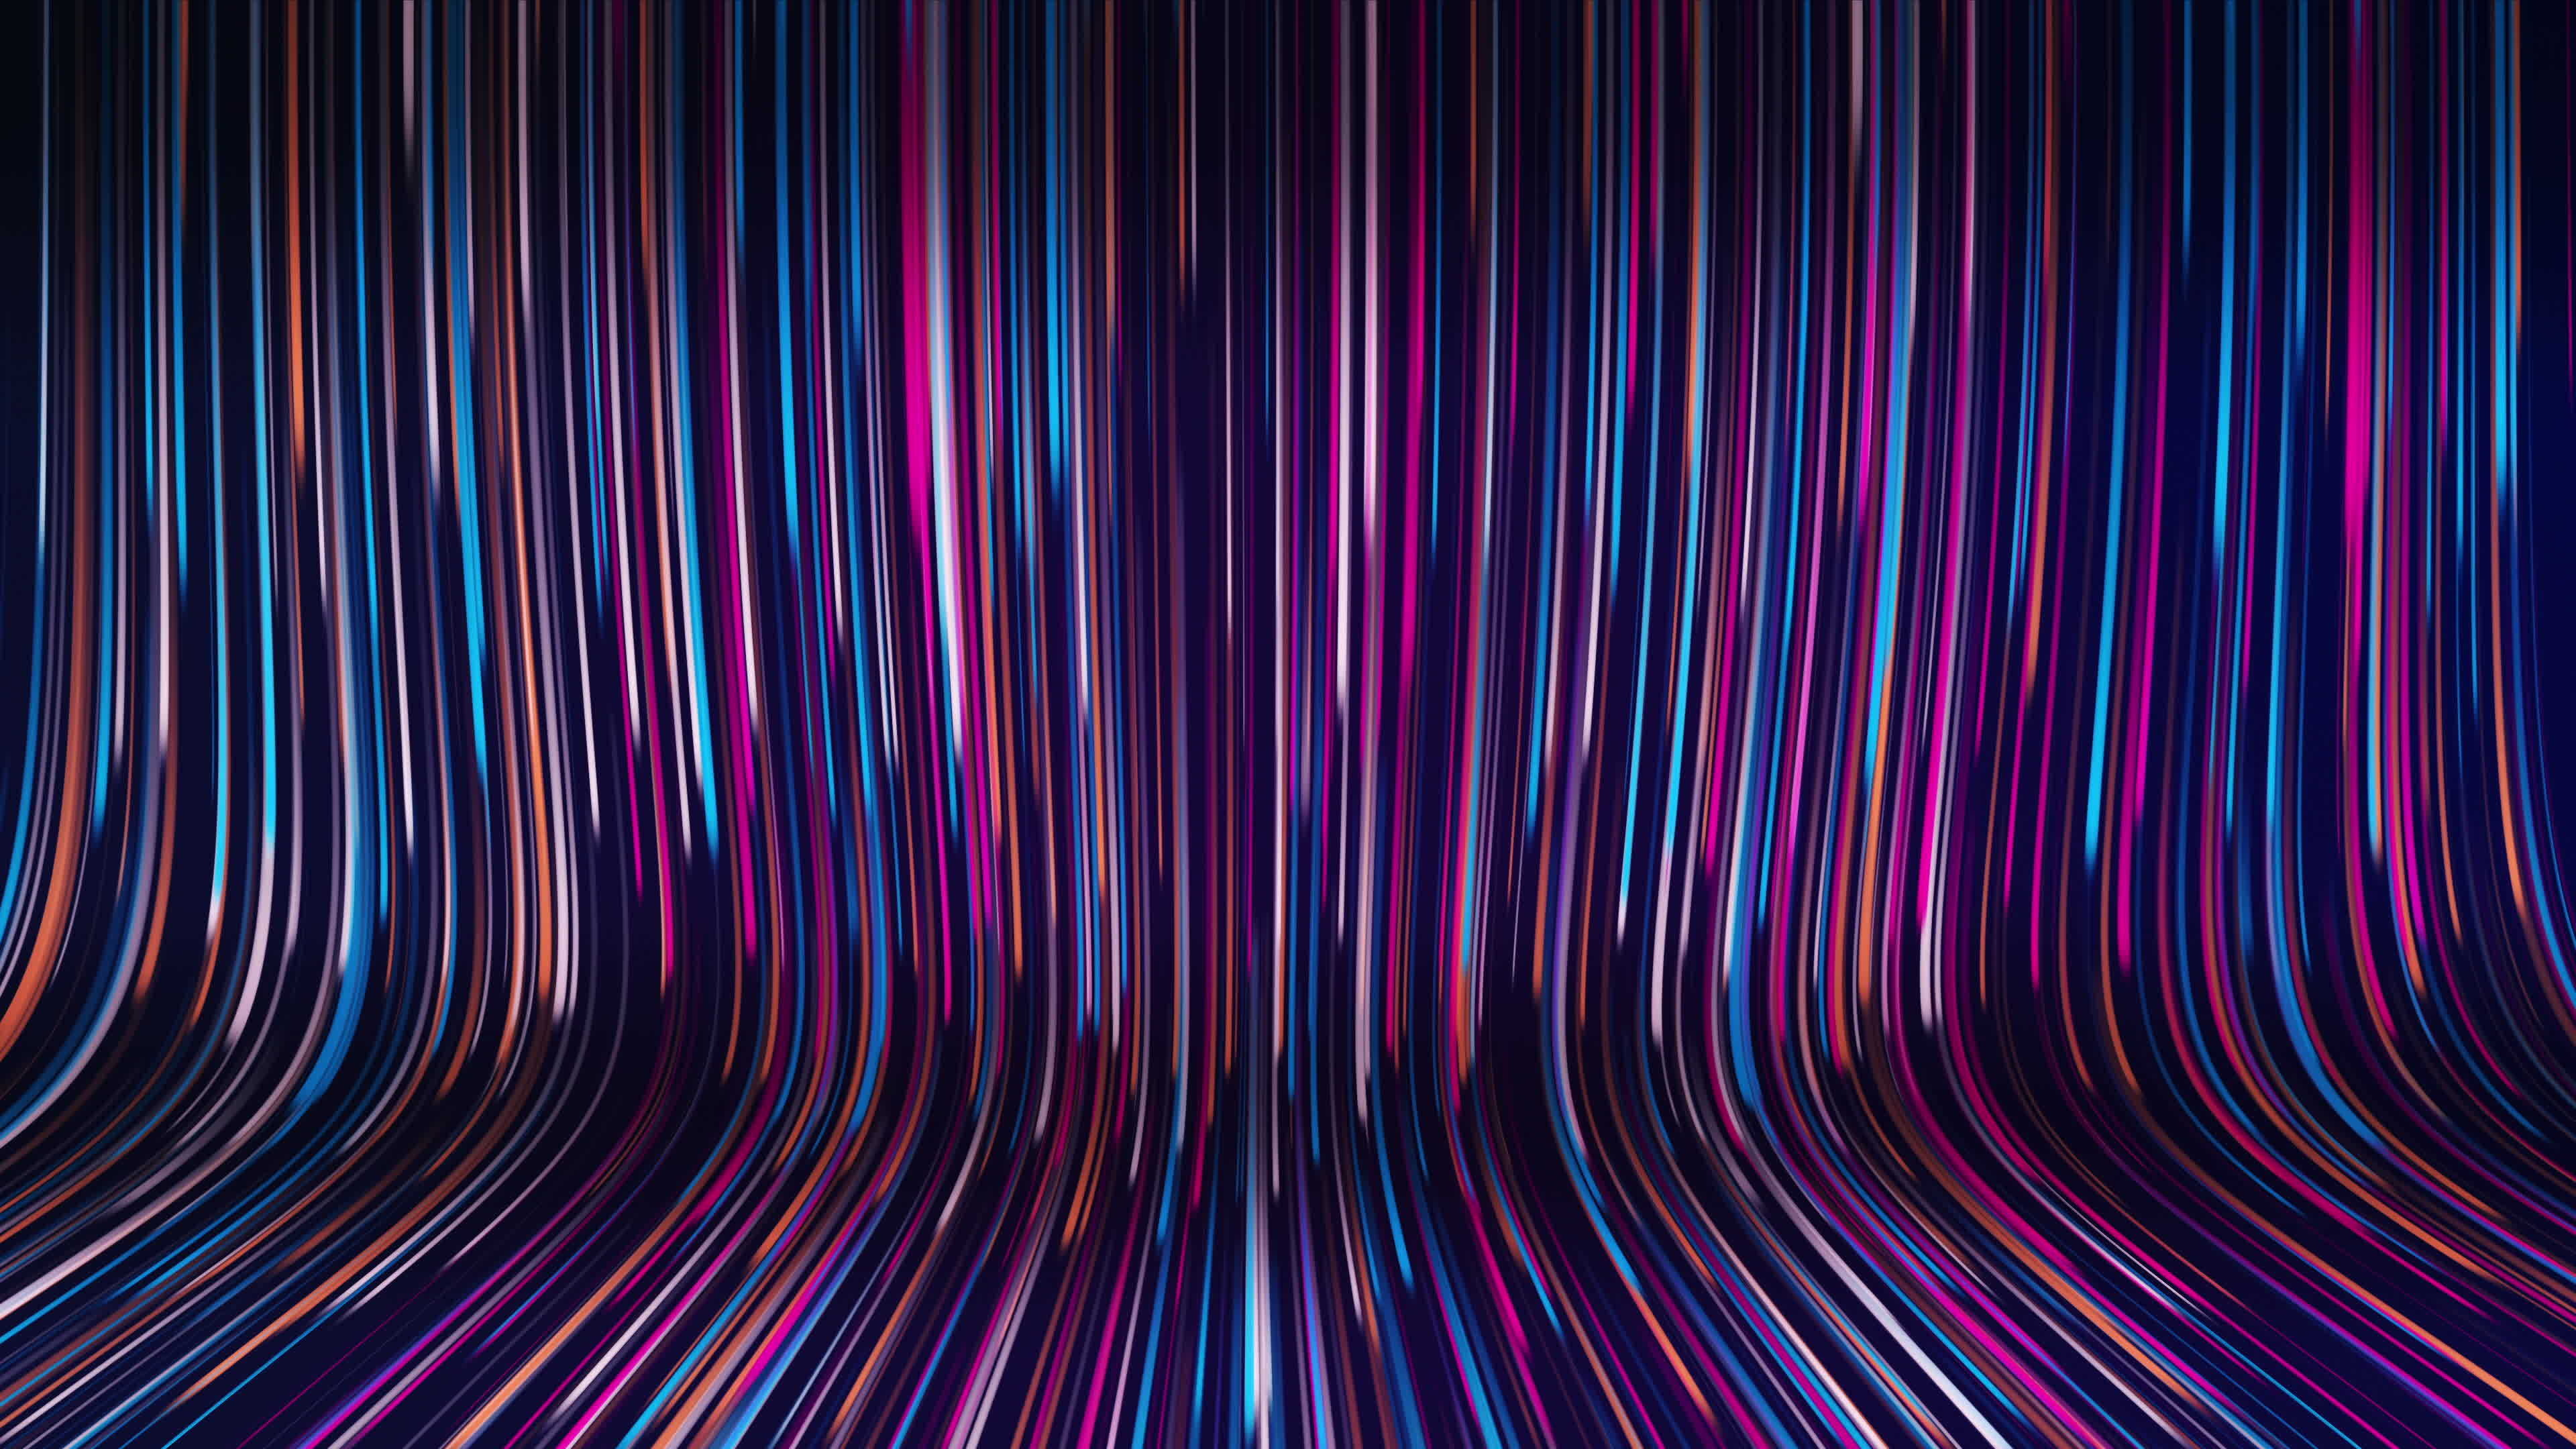 Backdrop: Colorful lines, Computer graphic design, Digital art, Flow, Parallel lines. 3840x2160 4K Wallpaper.